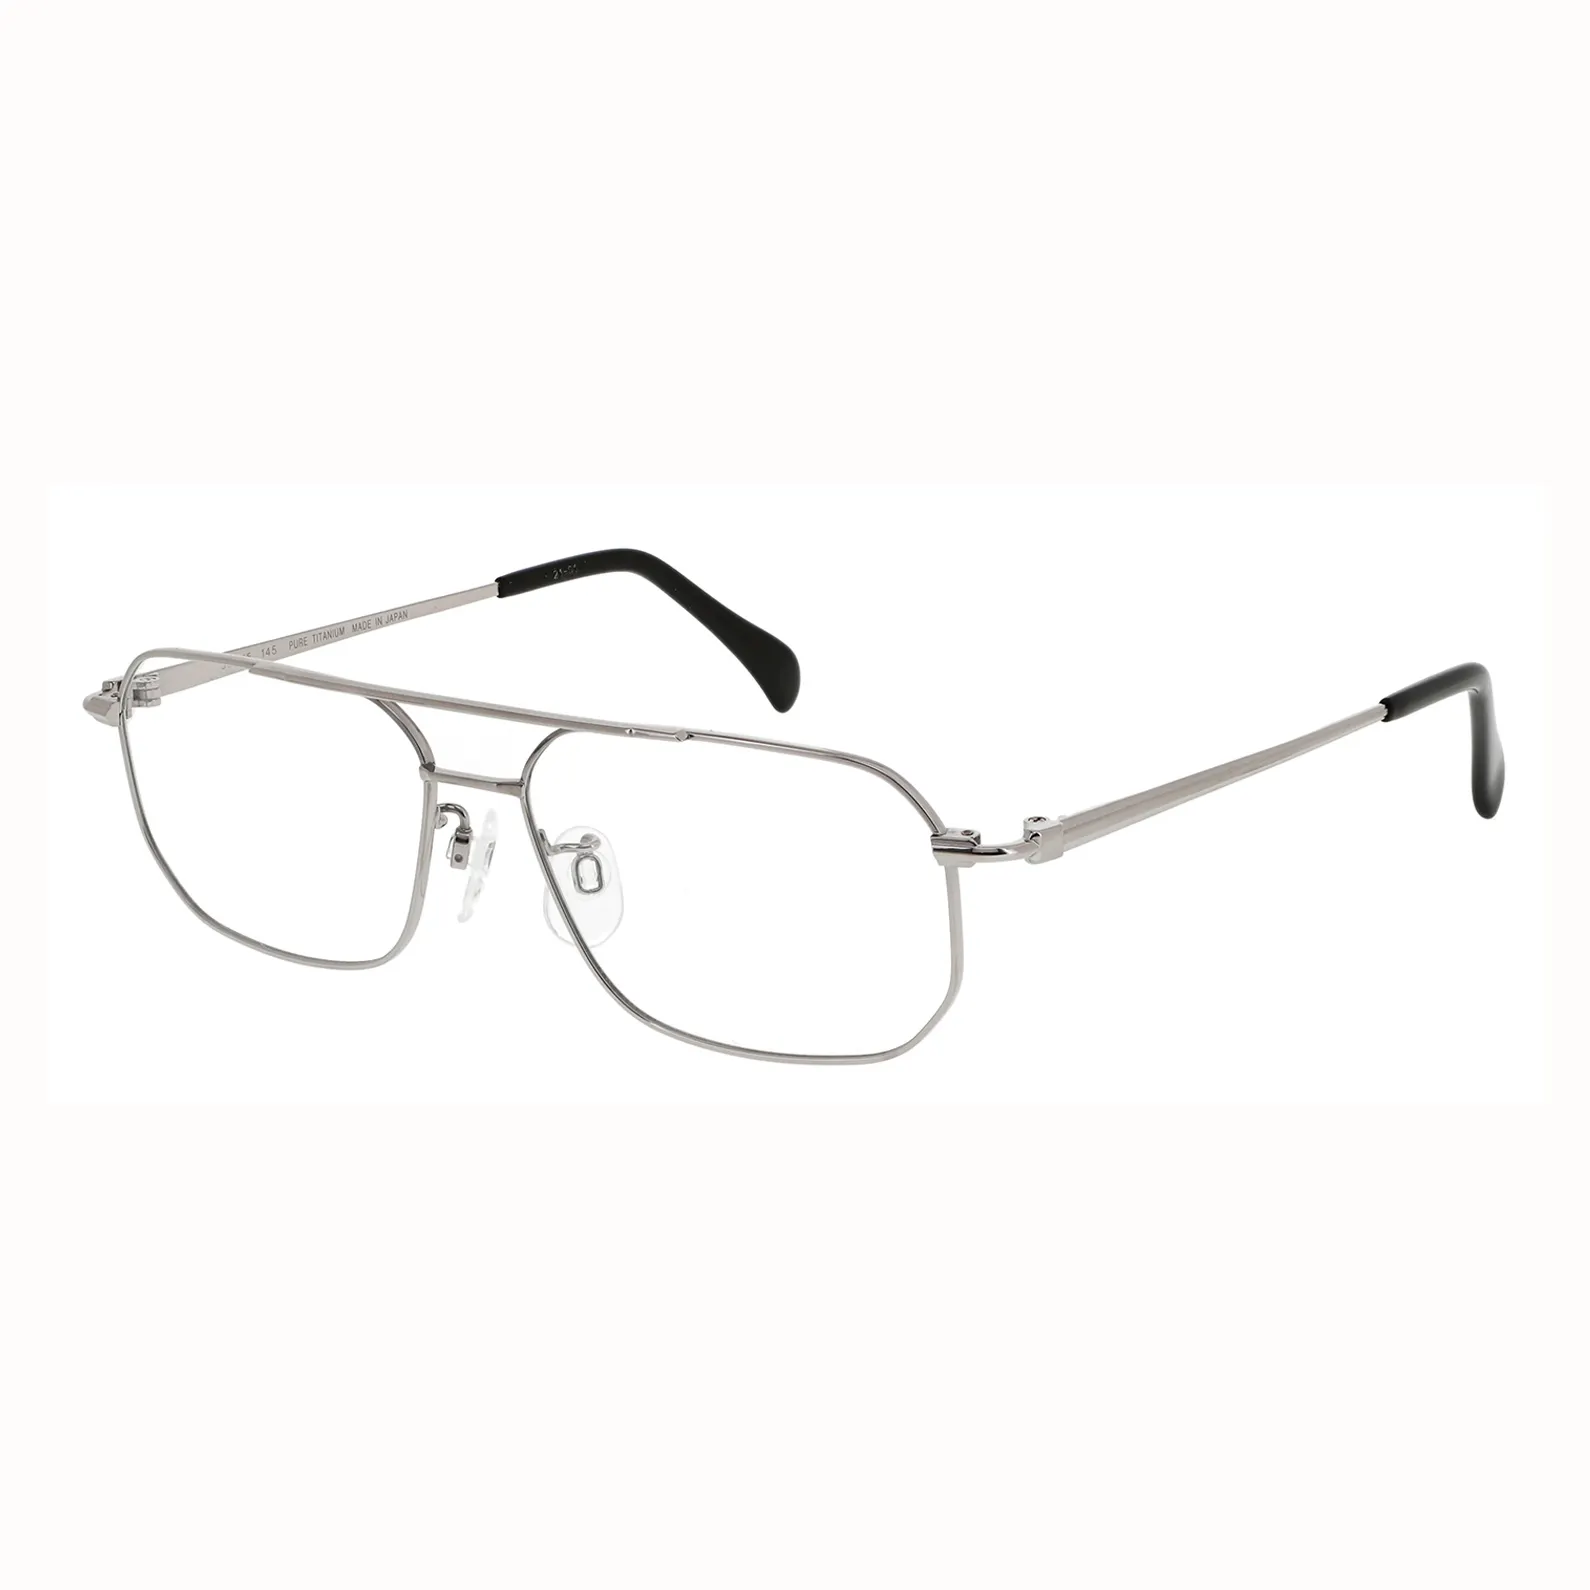 Japan high quality acetate frame glasses eyeglasses for men optical